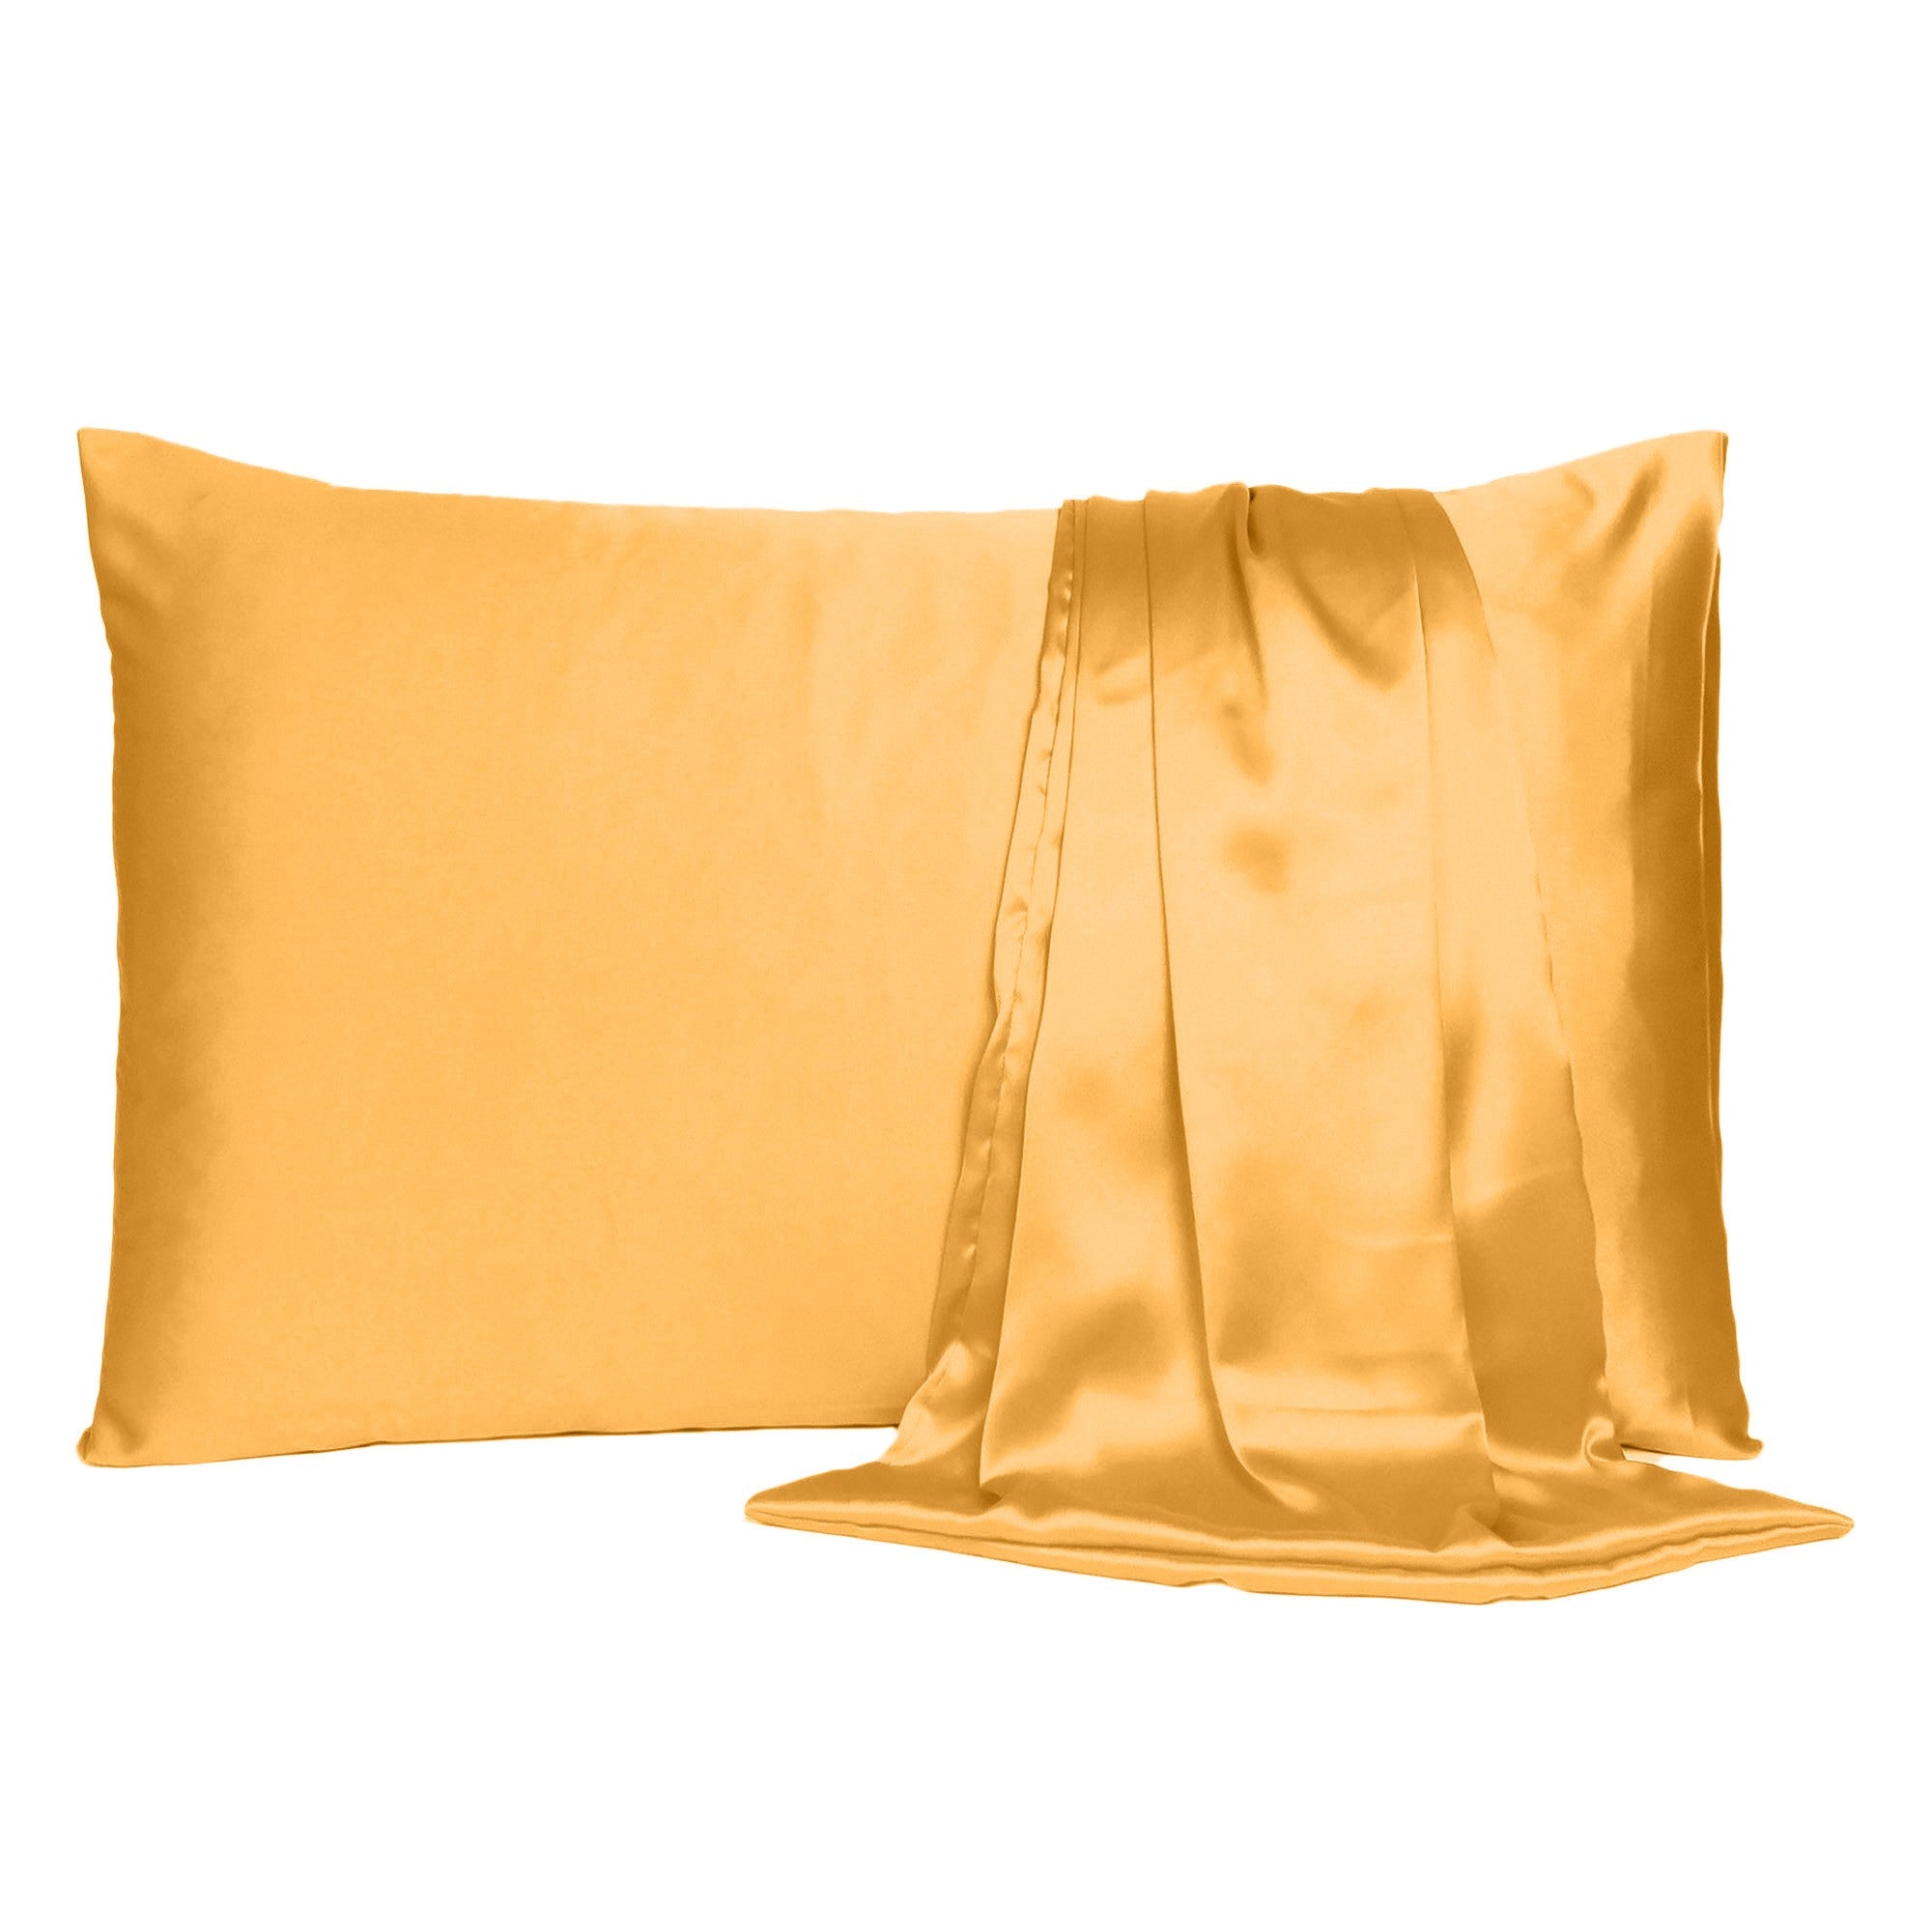 Apricot-Dreamy-Silky-Satin-King-Size-Pillowcase-Bedding